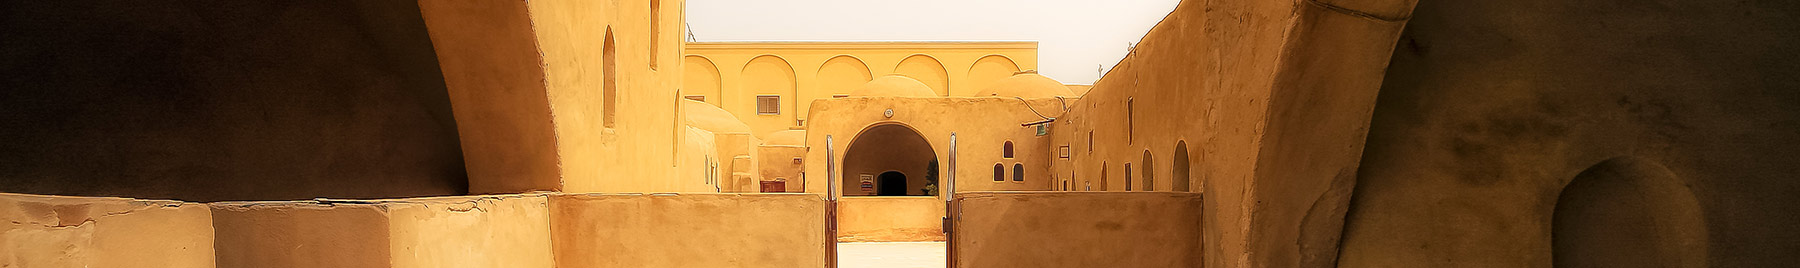 monastery entrance in Egypt